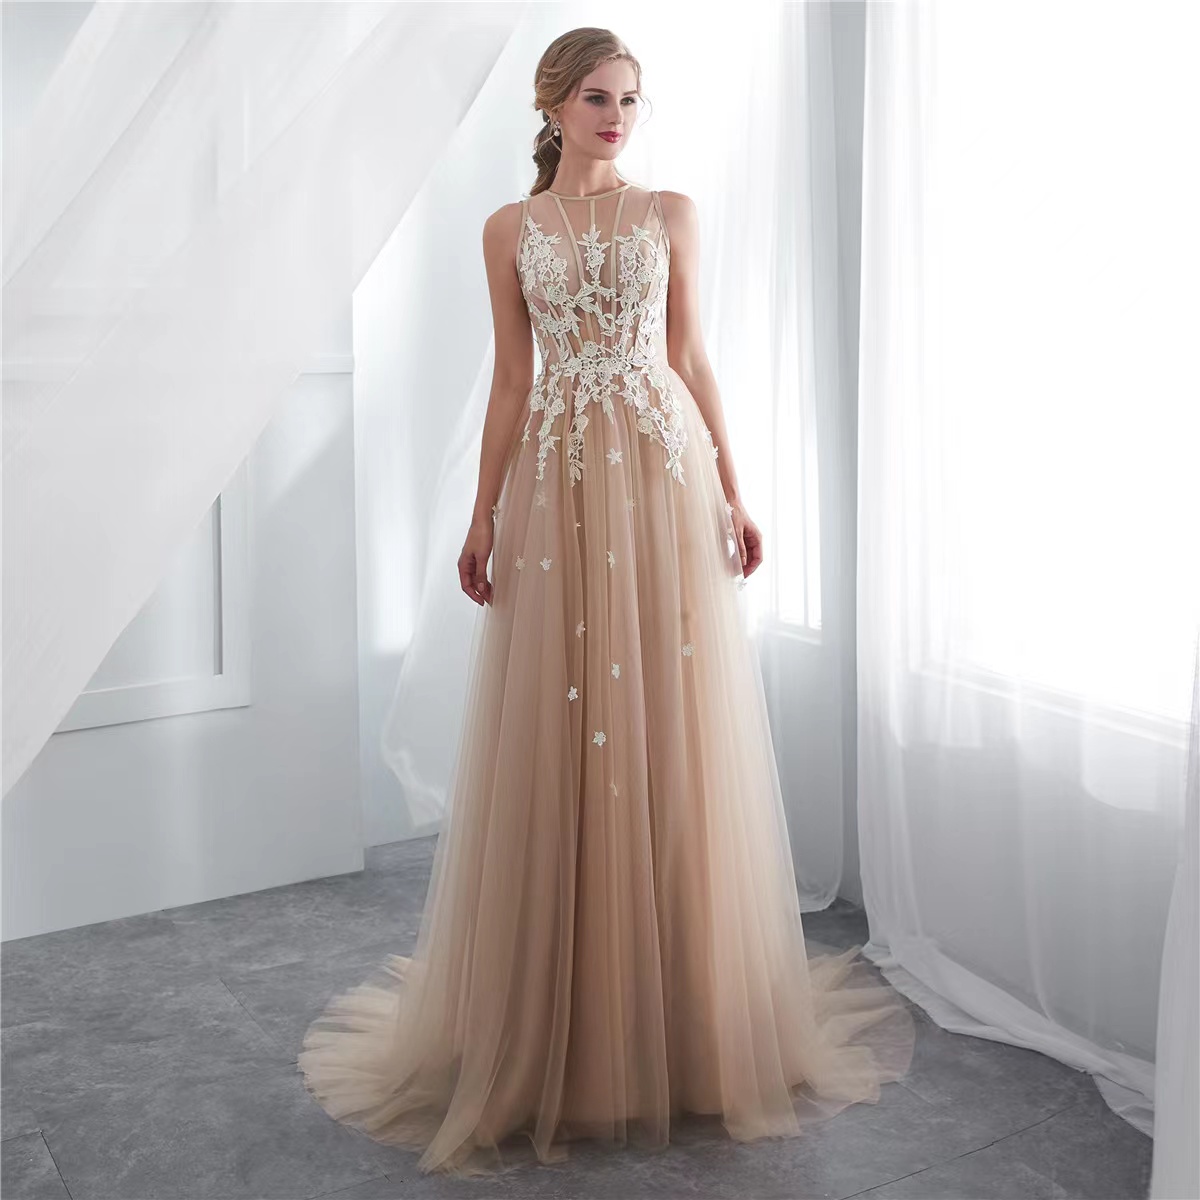 Champagne prom dress,lace party dress,elegant wedding dress,custom made